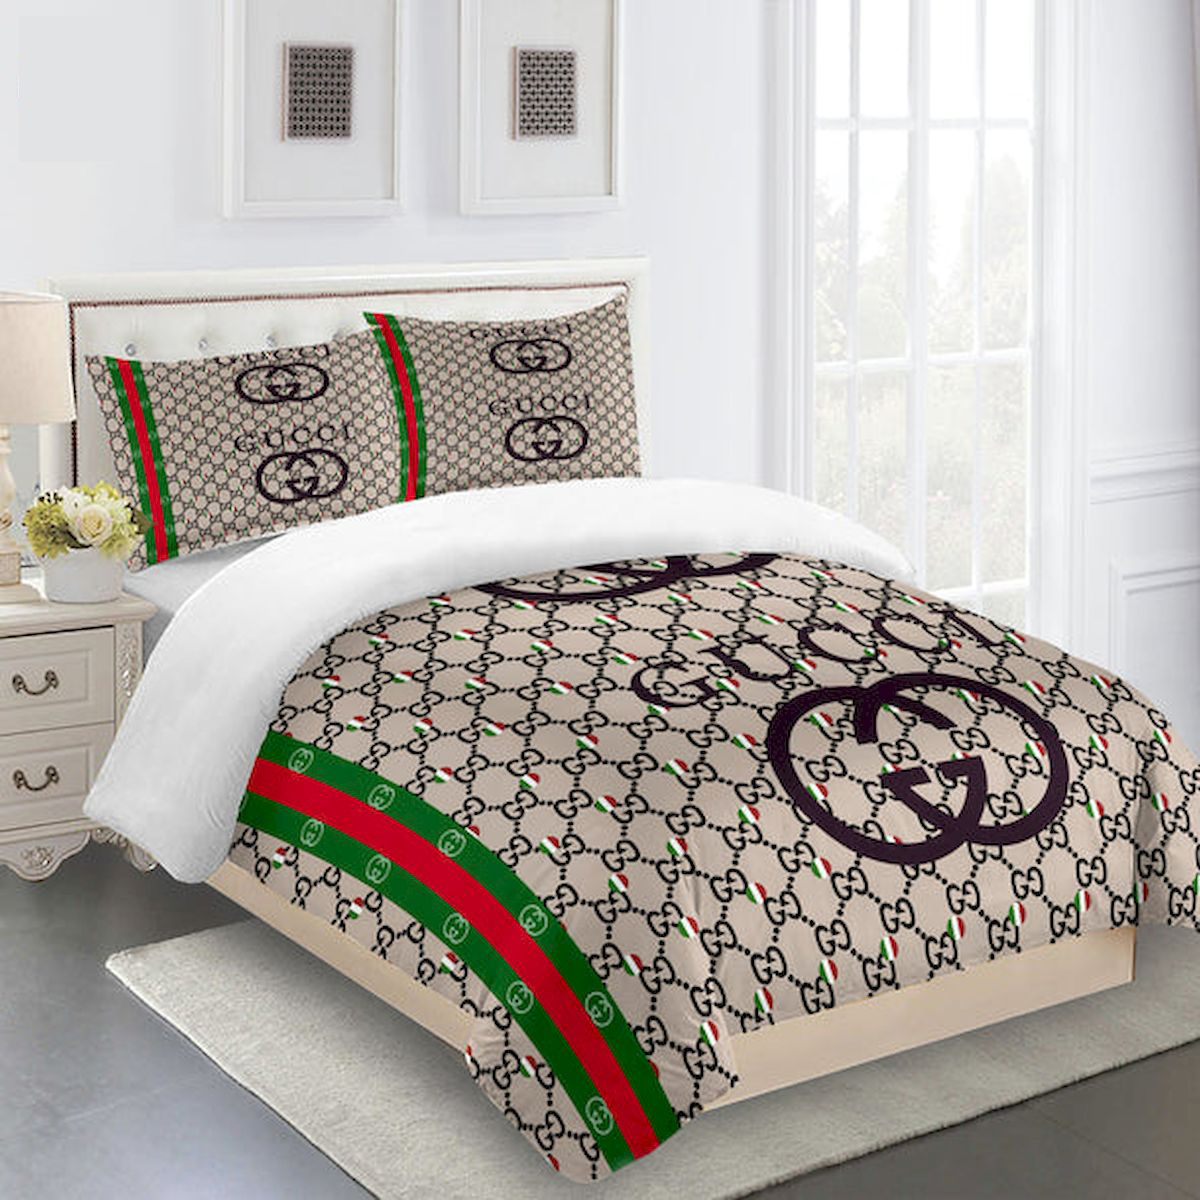 GC Italy Luxury Brand High-End Bedding Set Home Decor HT